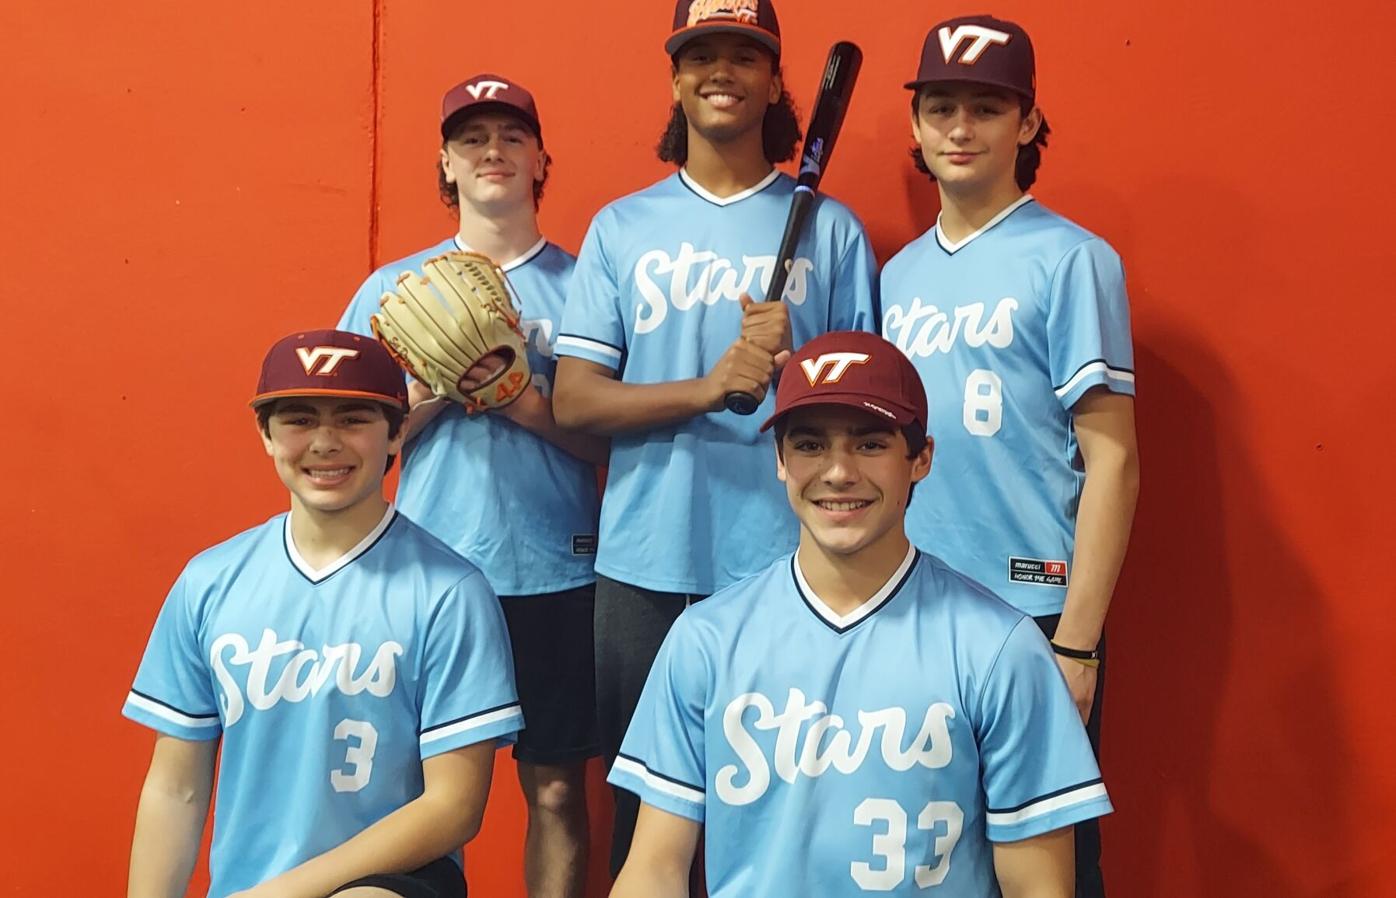 Jordan Gonzalez- Optimist Baseball Team - Christian Brothers High